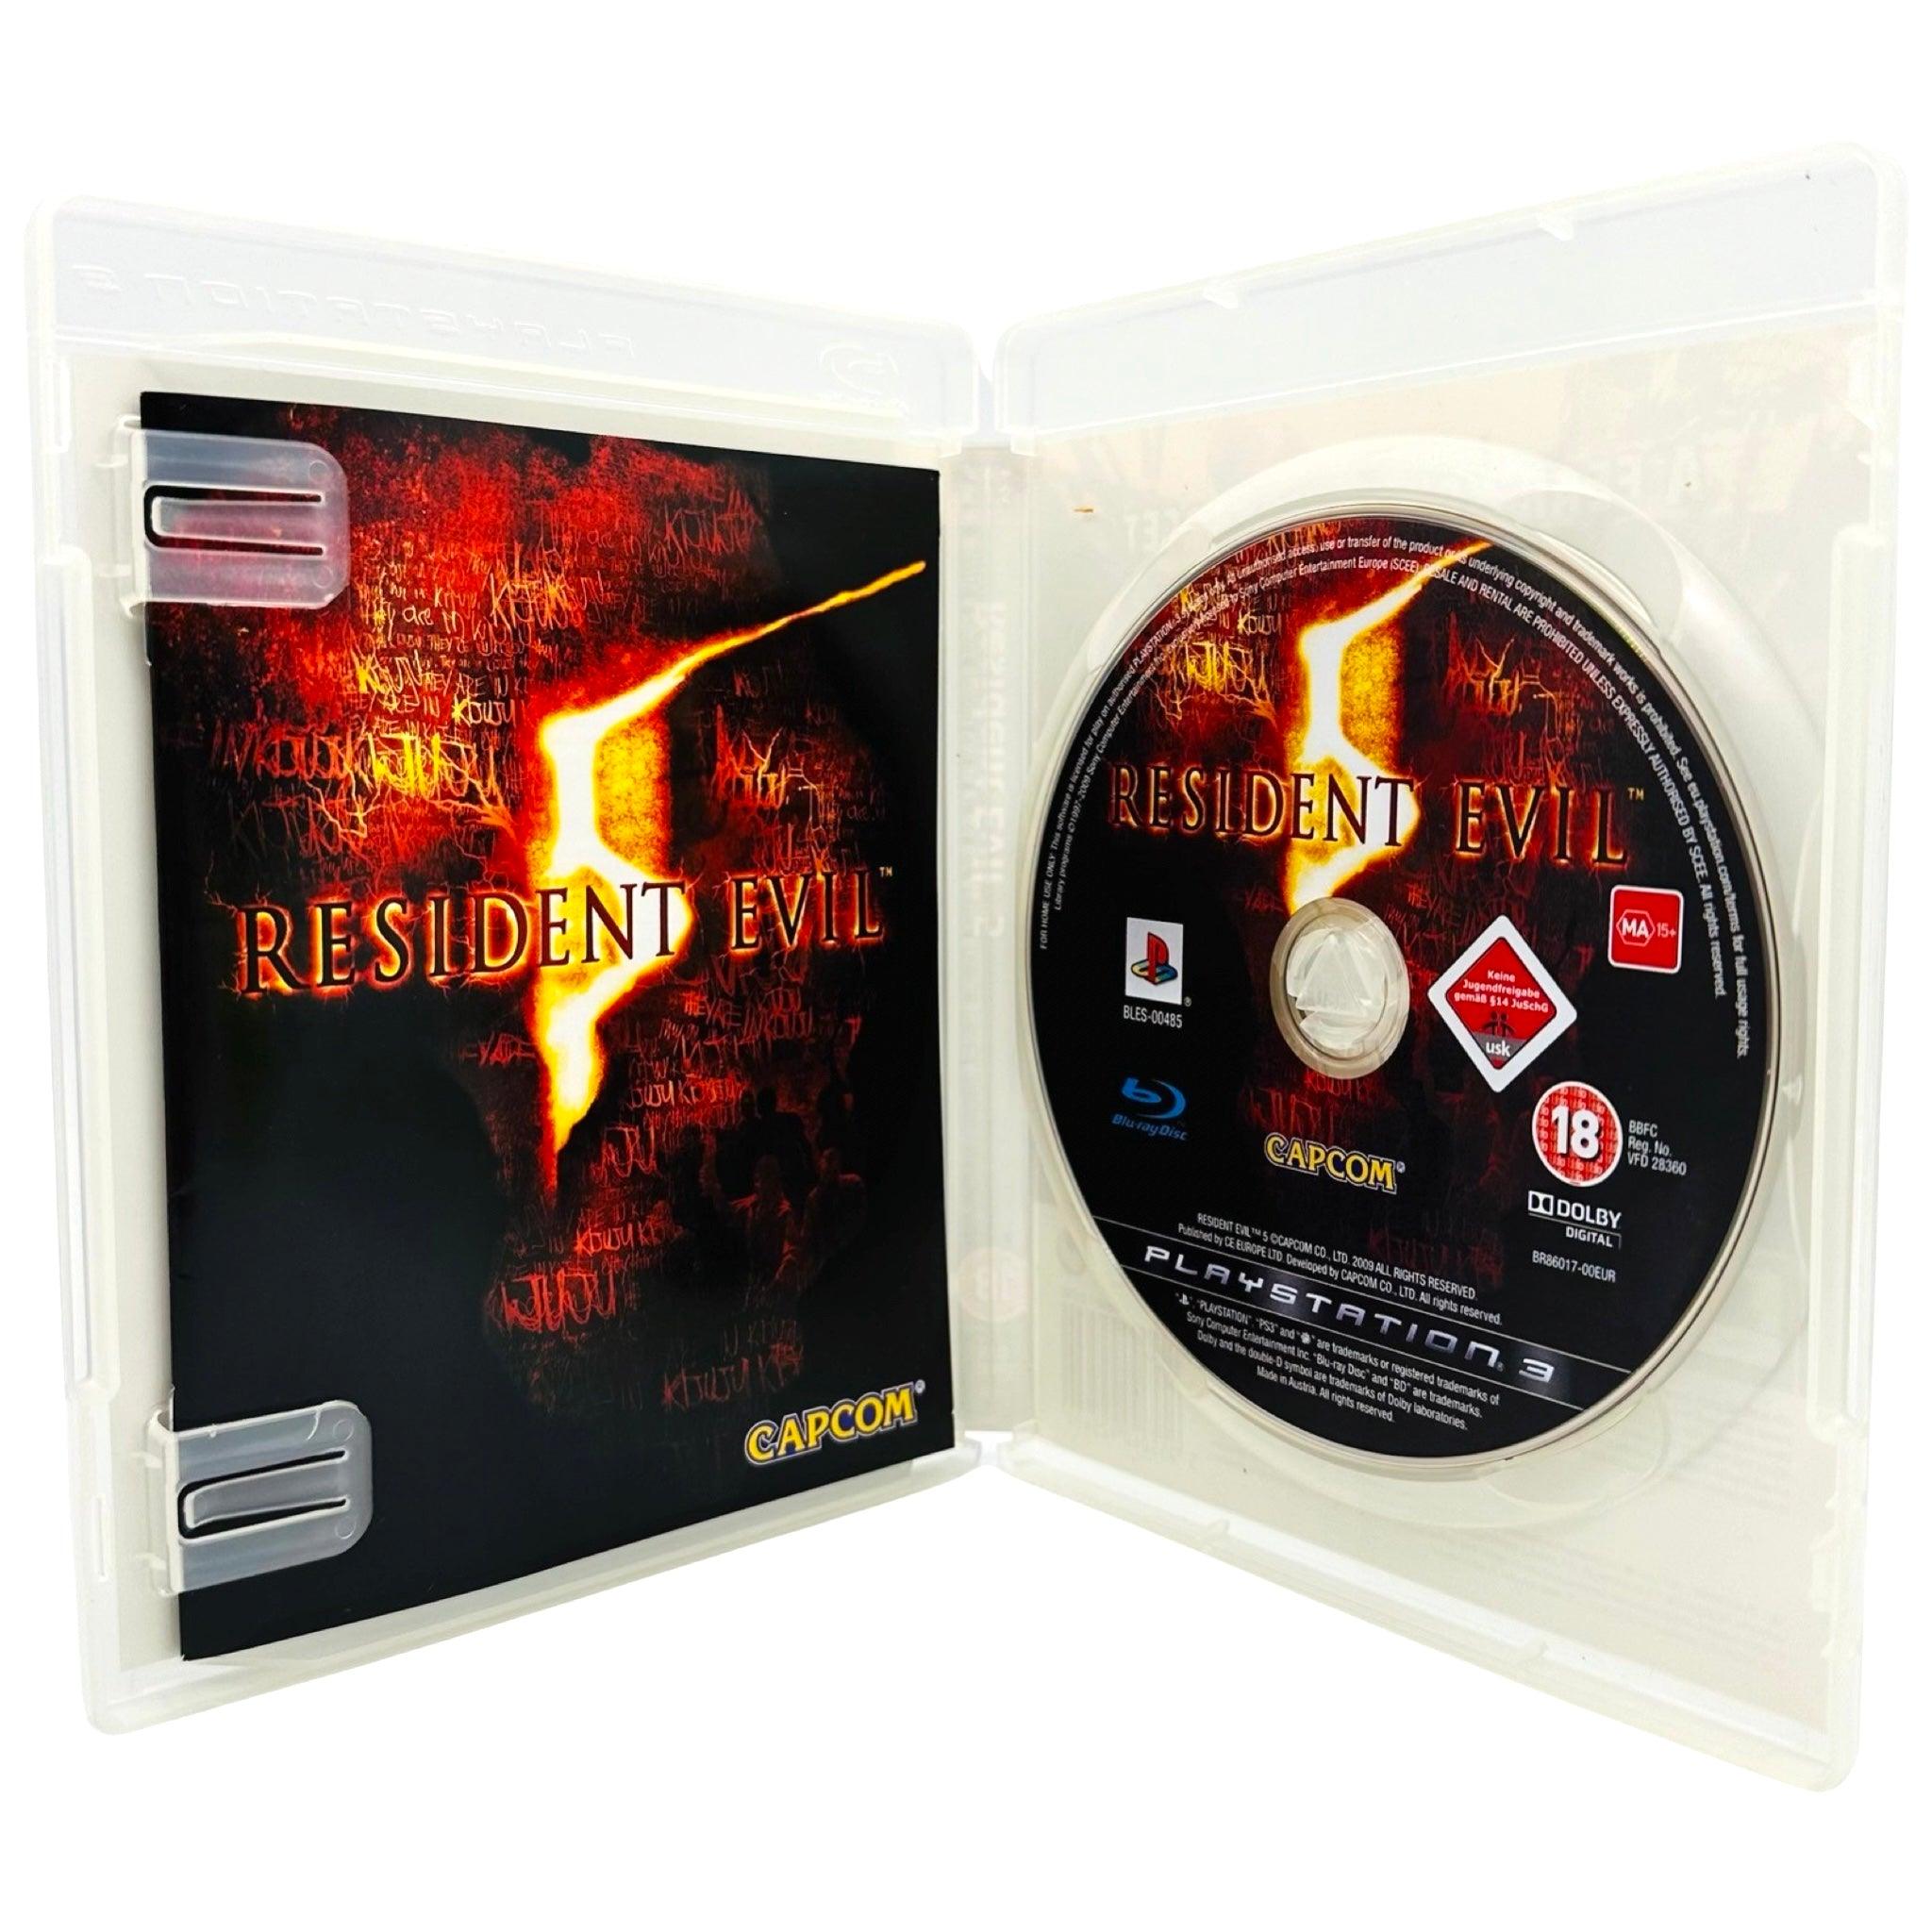 PS3: Resident Evil 5 - RetroGaming.no